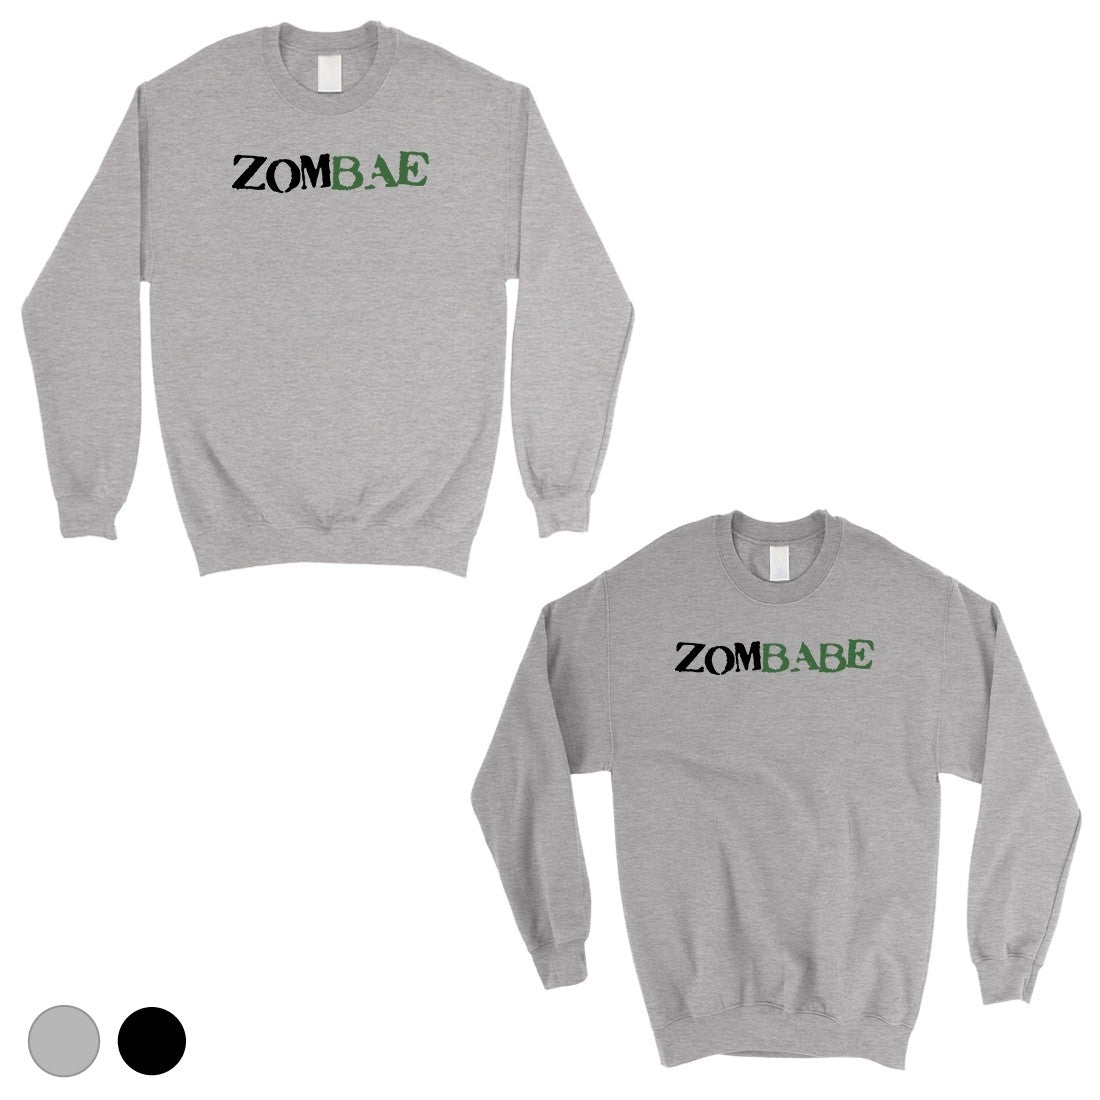 Zombae And Zombabe Matching Sweatshirt Pullover Gray